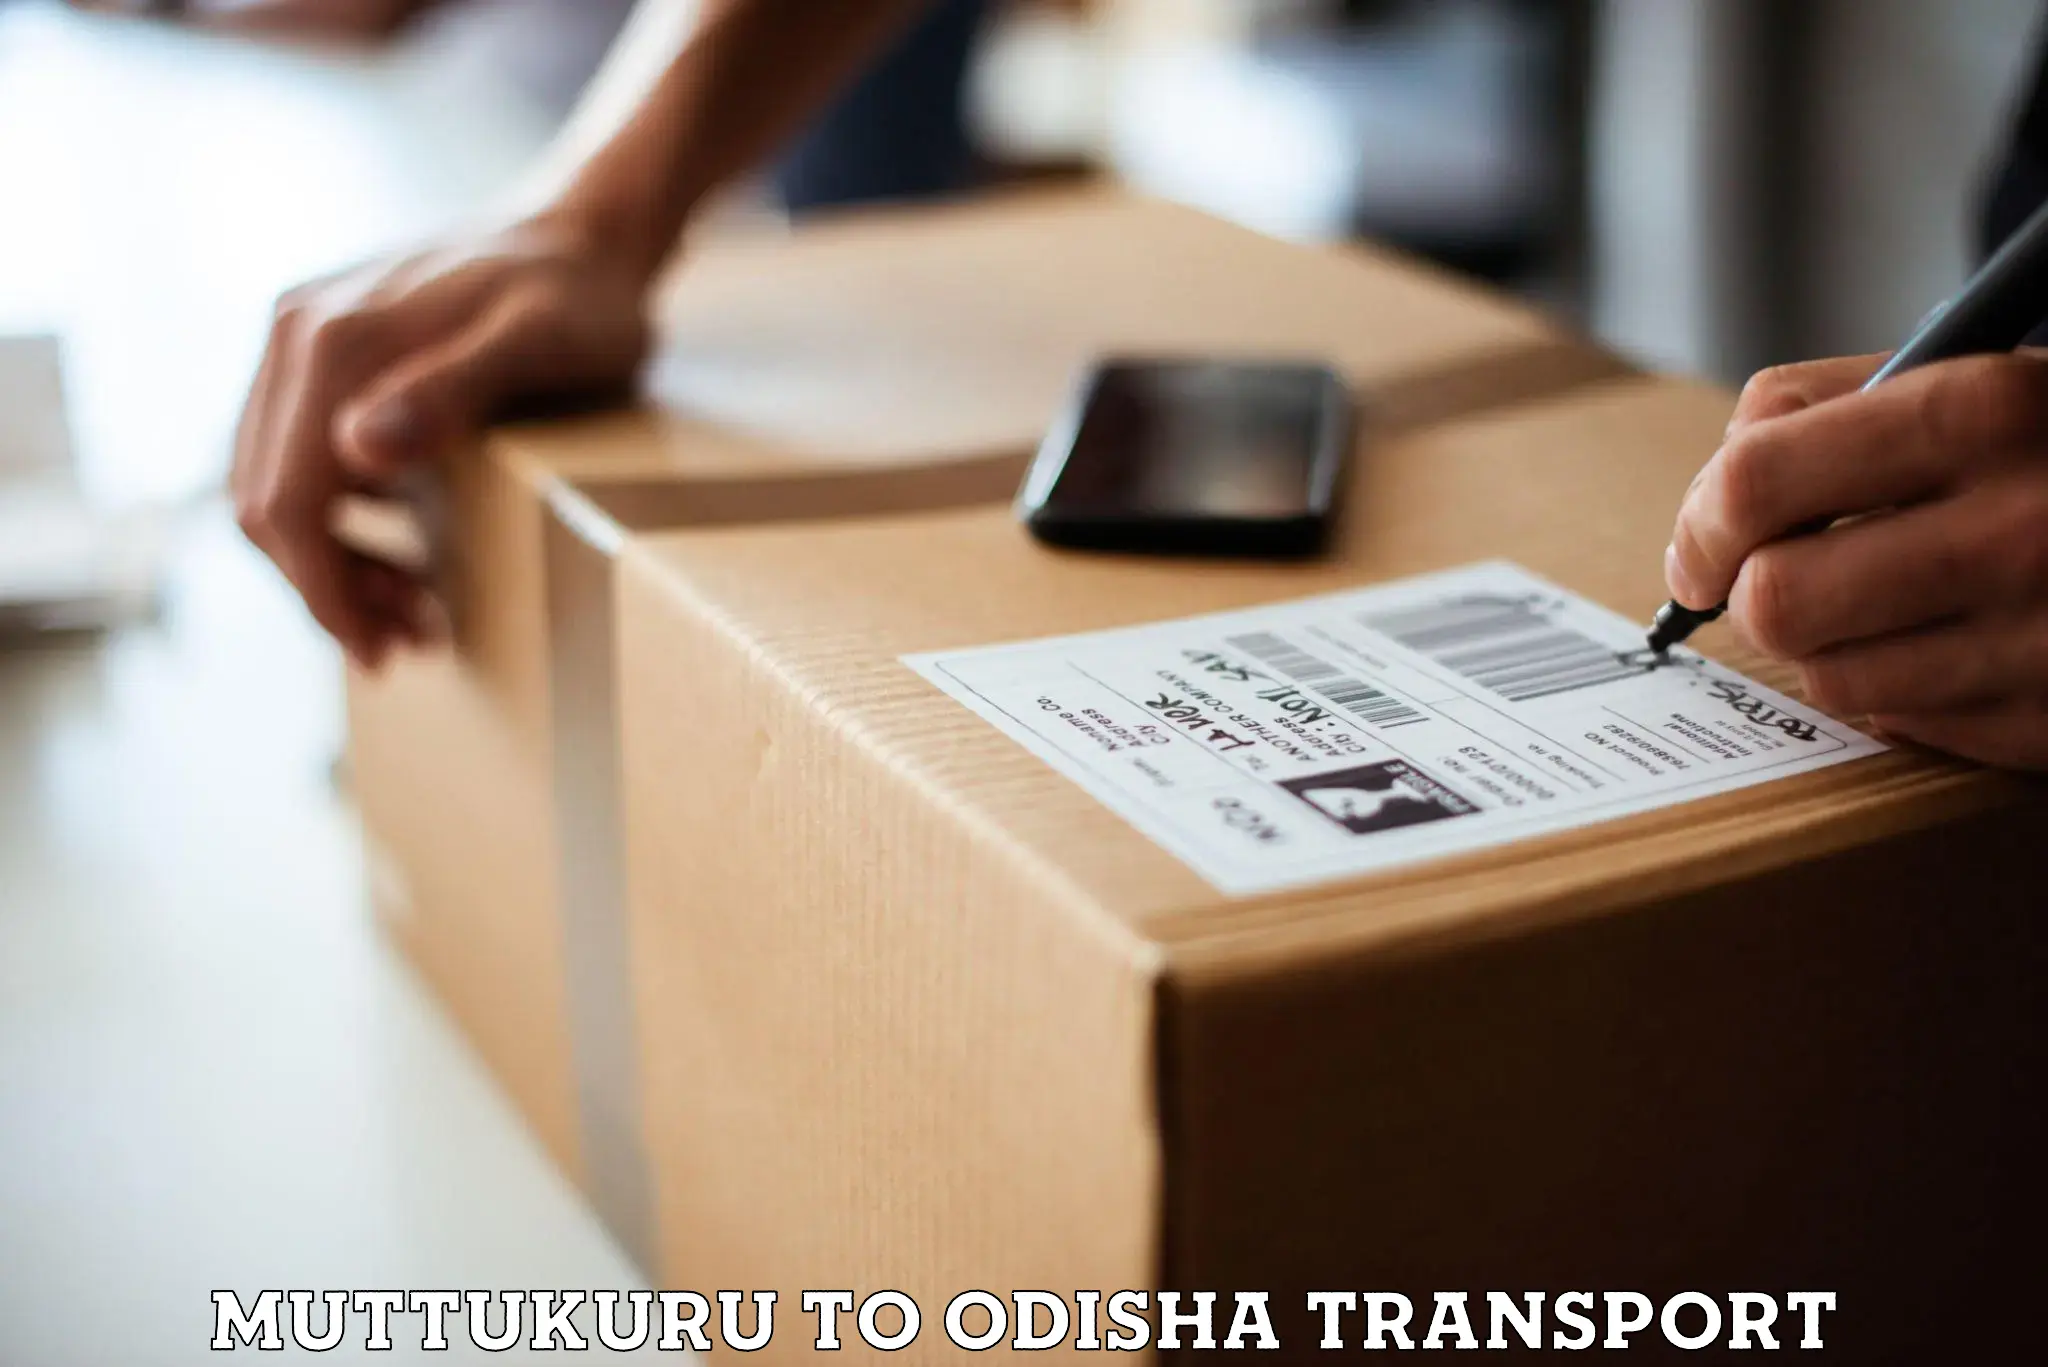 Delivery service Muttukuru to Tihidi